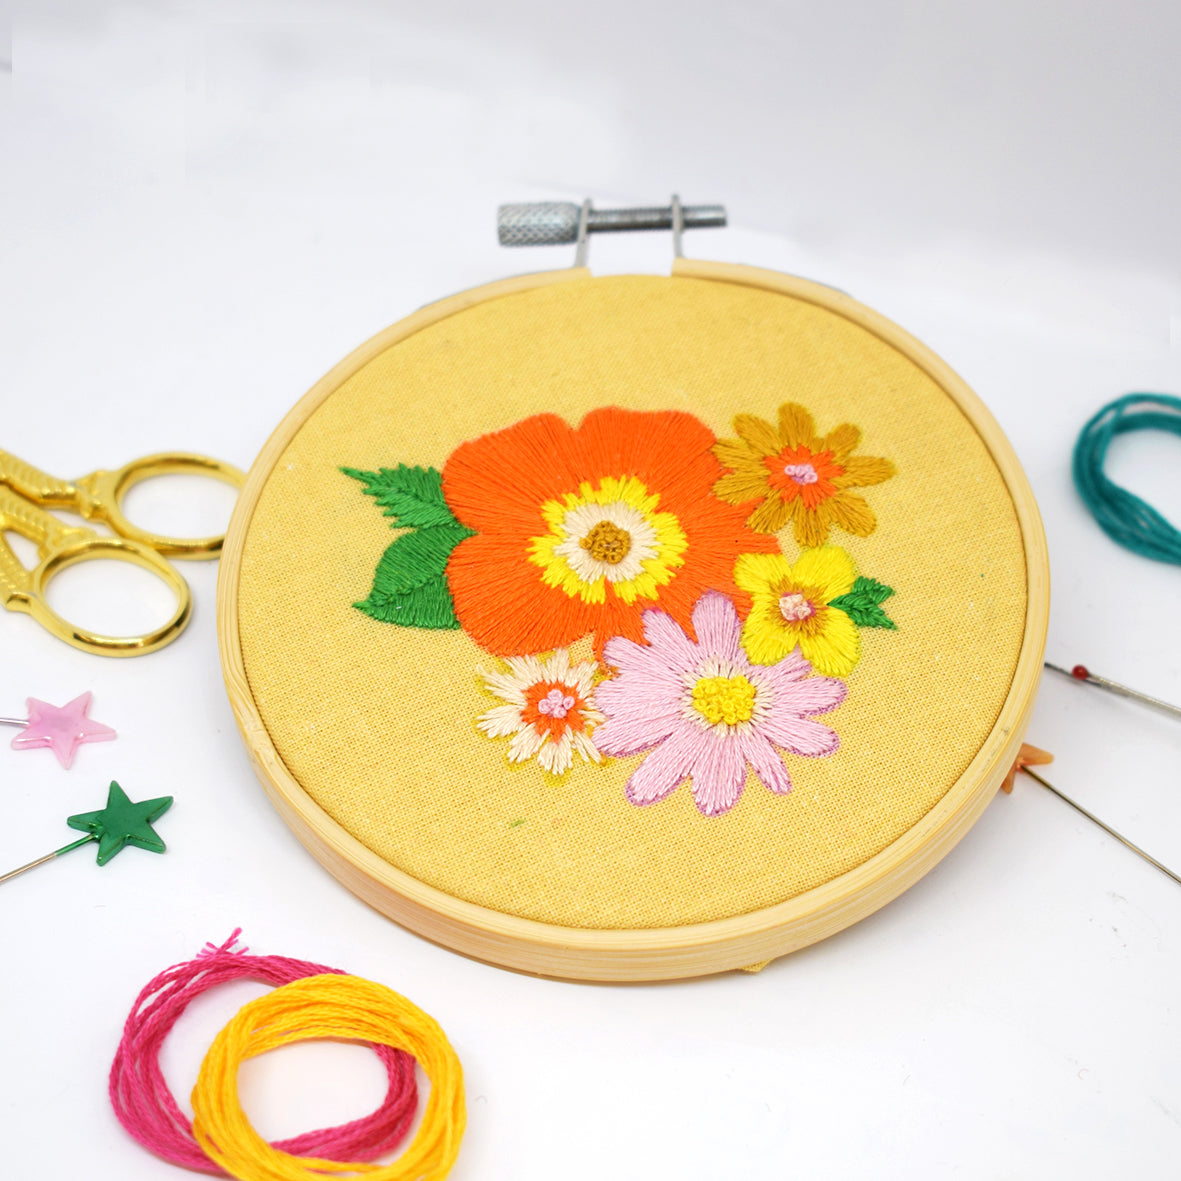 Make Flower Embroidery Kit